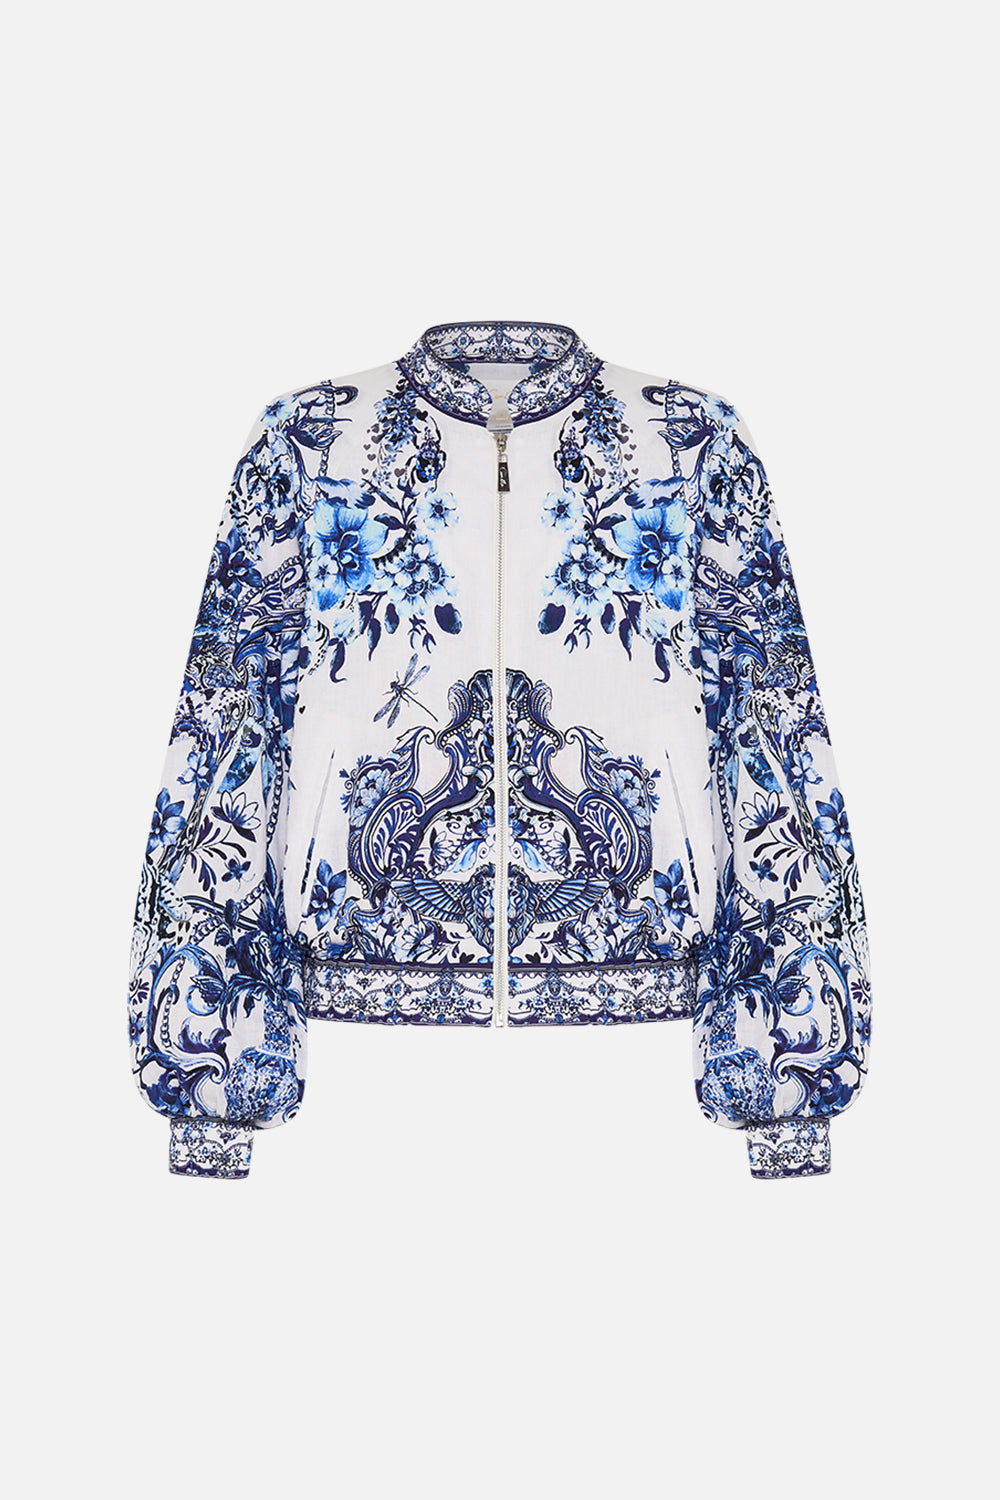 CAMILLA silk bomber jacket in Glaze and Graze print